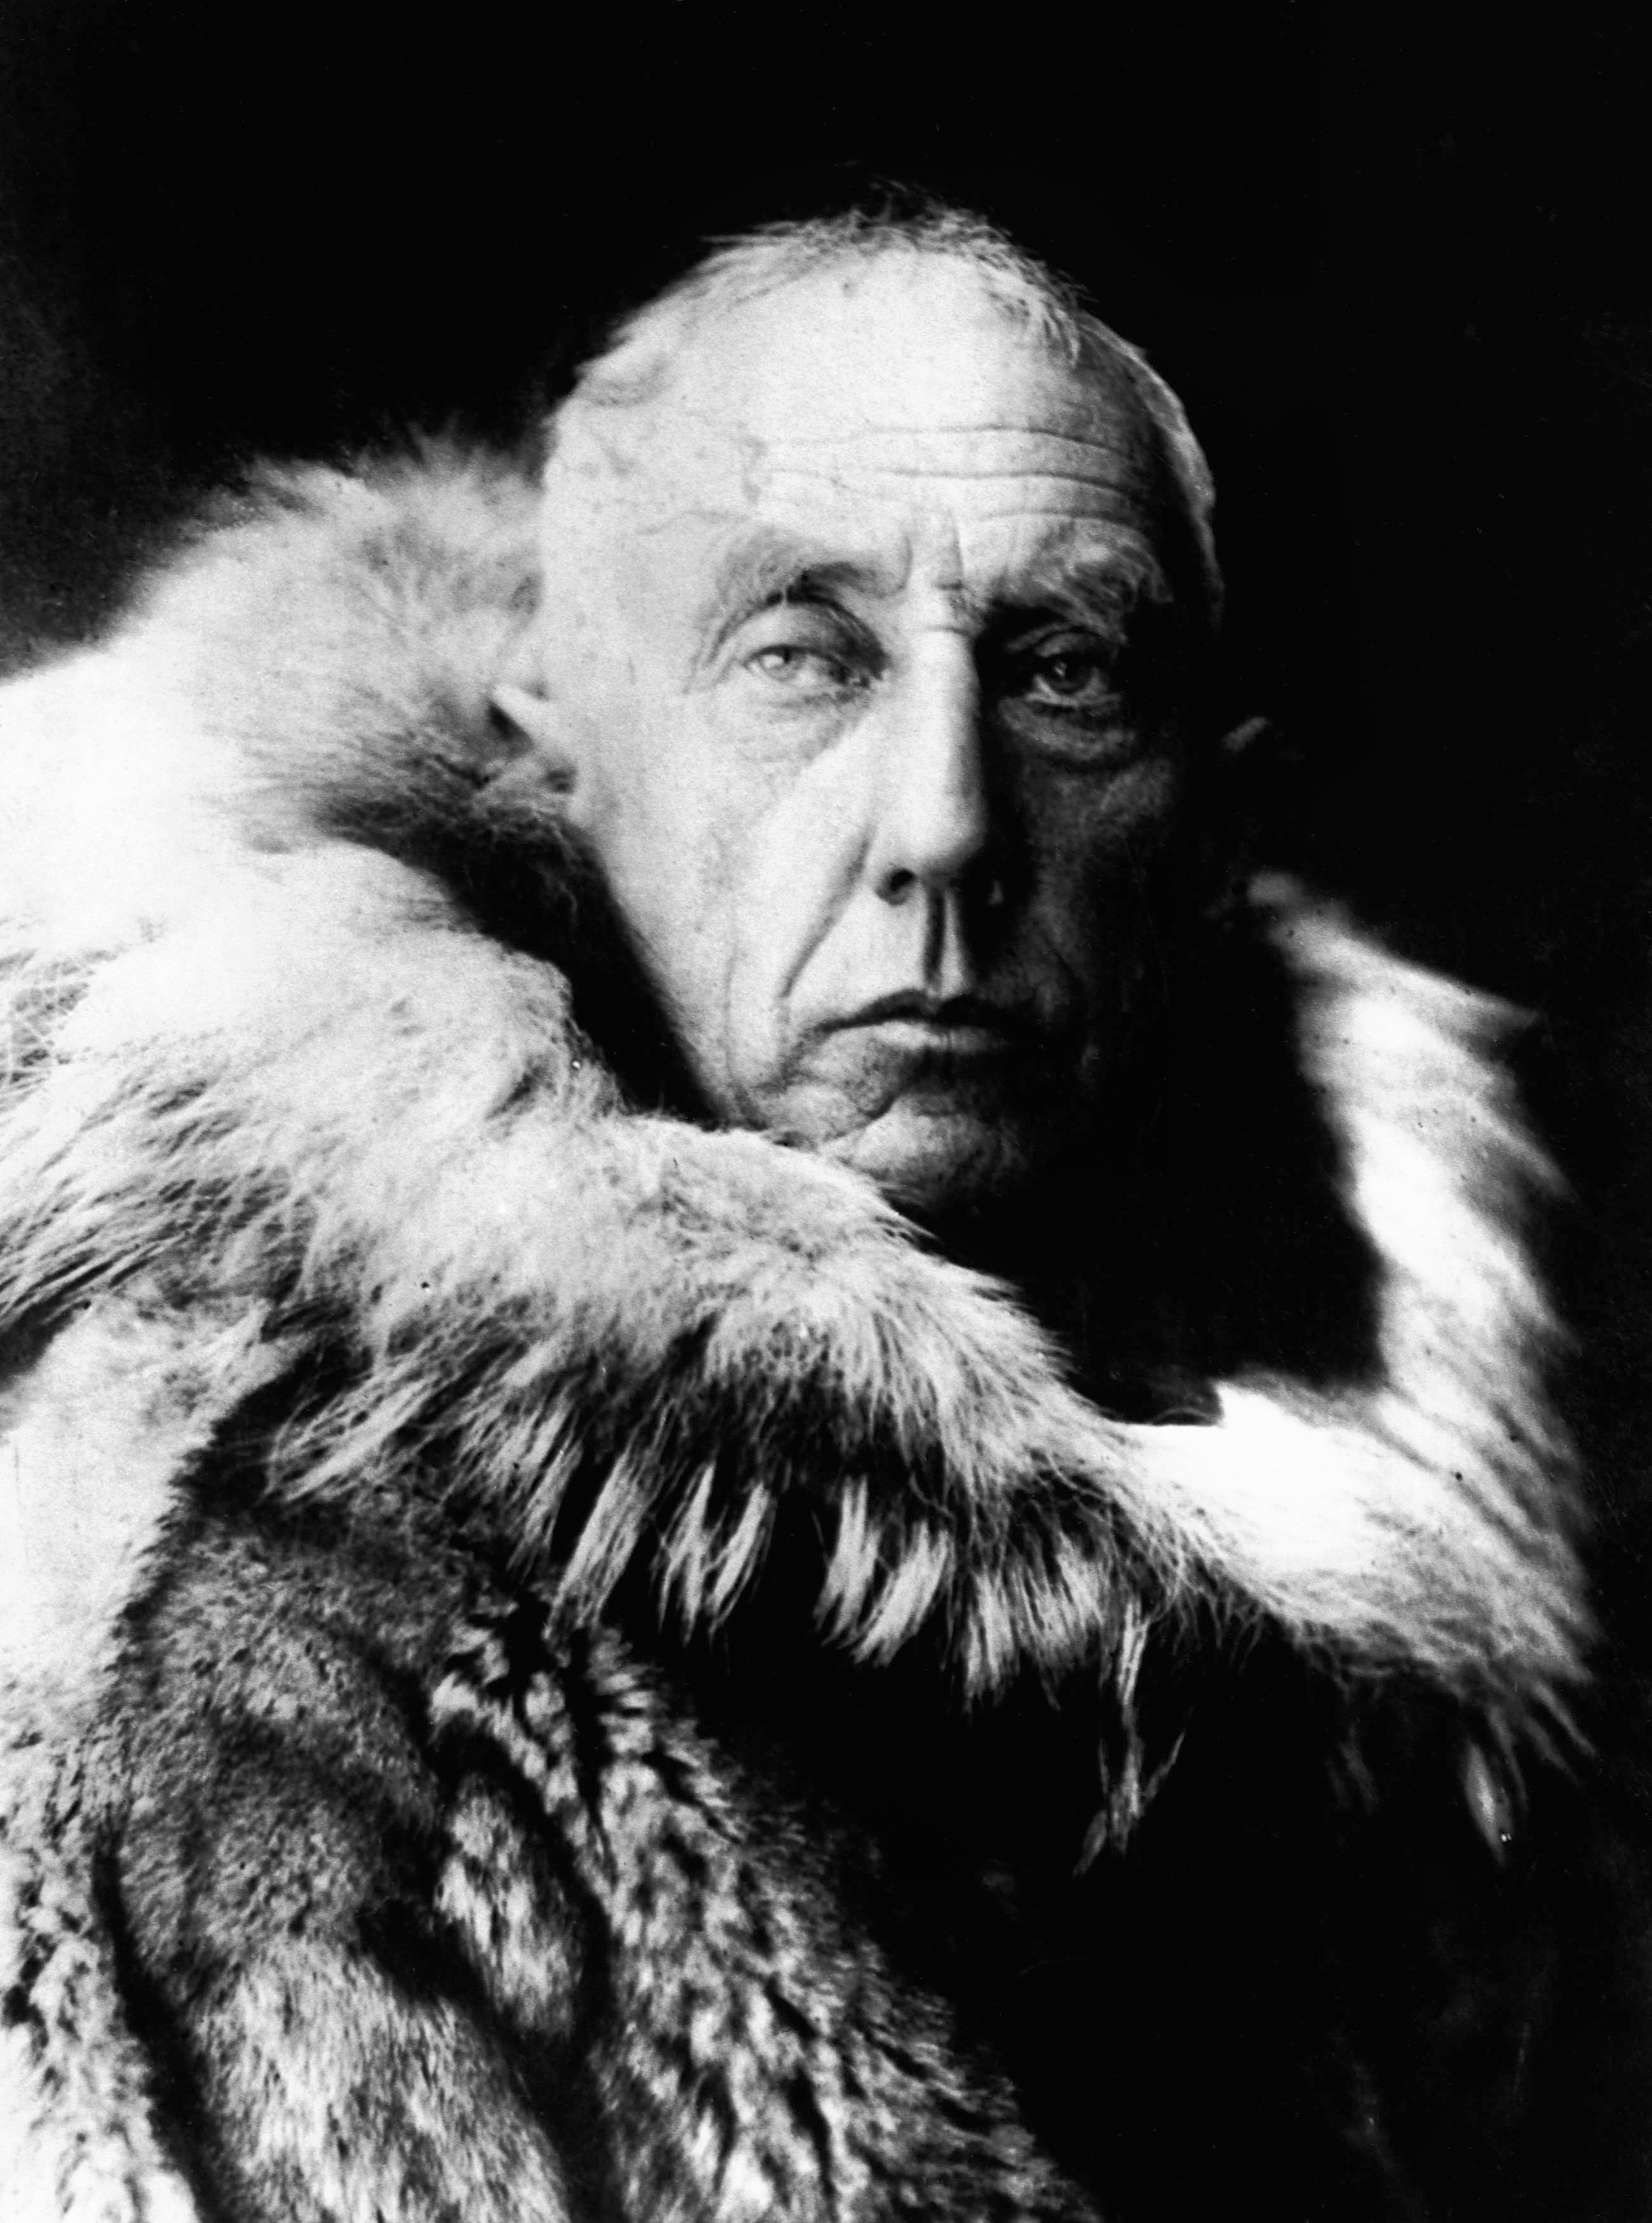  Roaldo Amundseno biografija